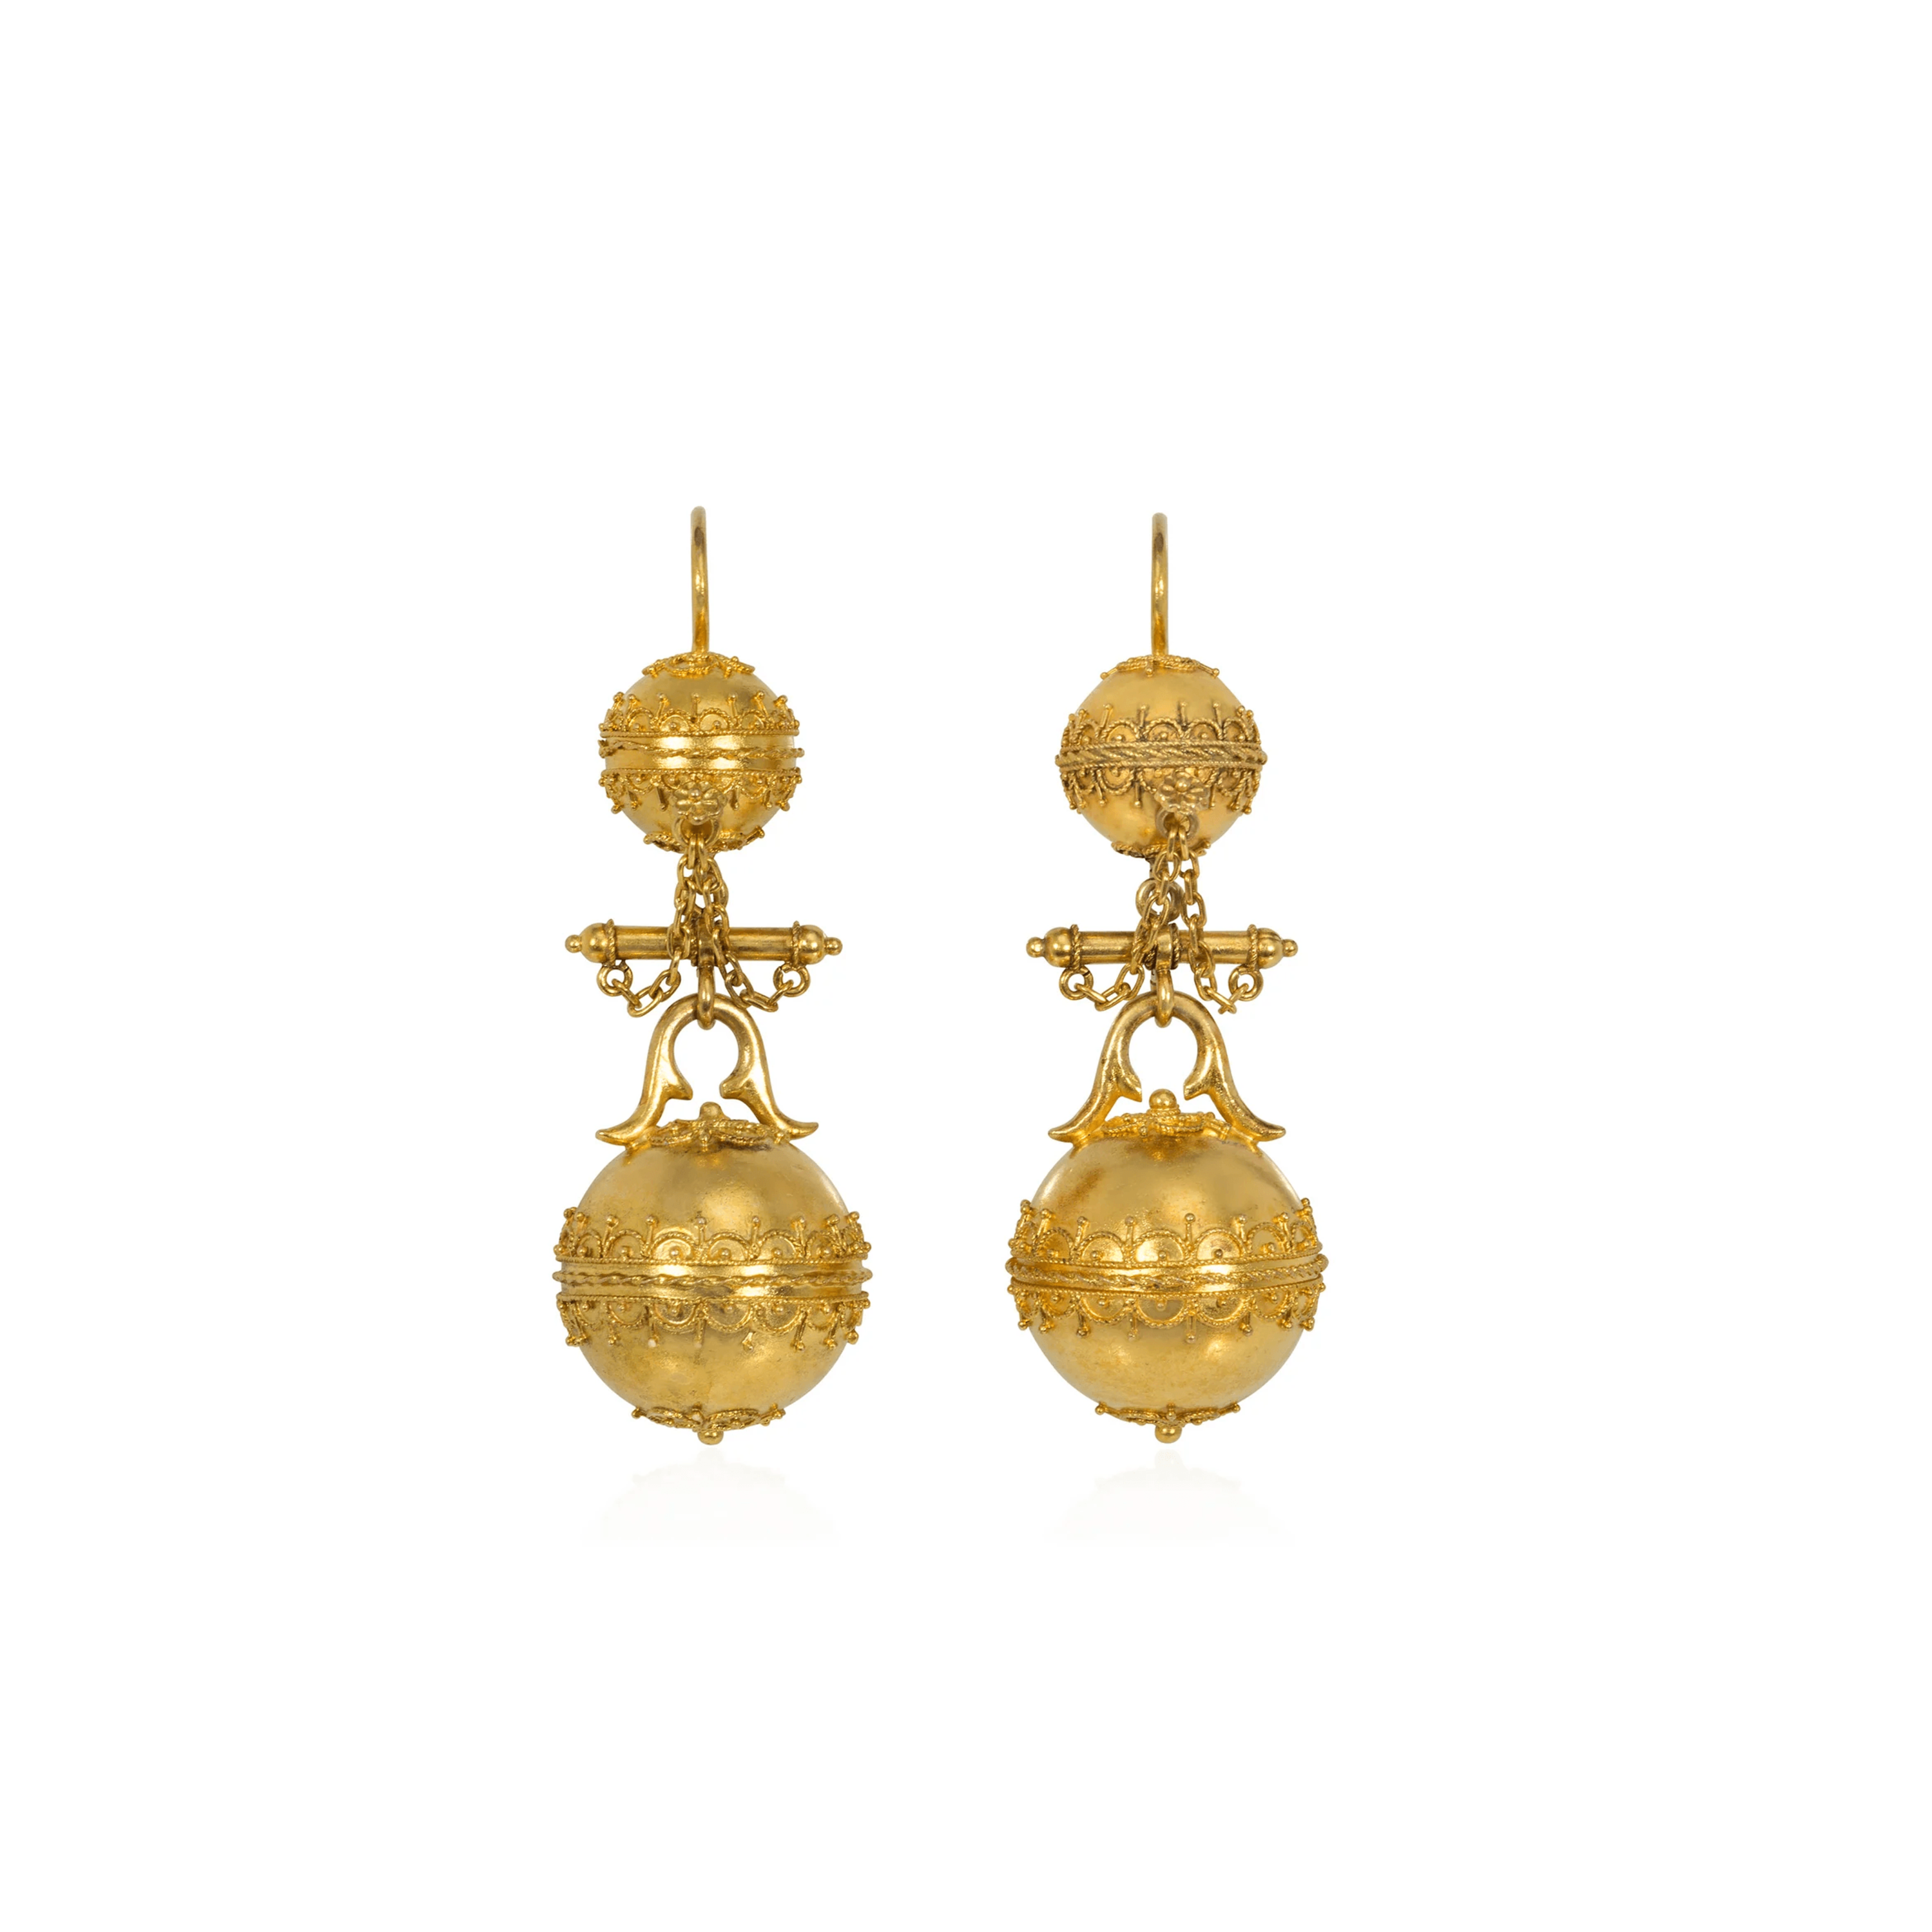 Light Weight Gold Earring Designs for Girls || Stylish Gold Earring  Collections || | Gold earrings models, Simple gold earrings, Gold earrings  designs